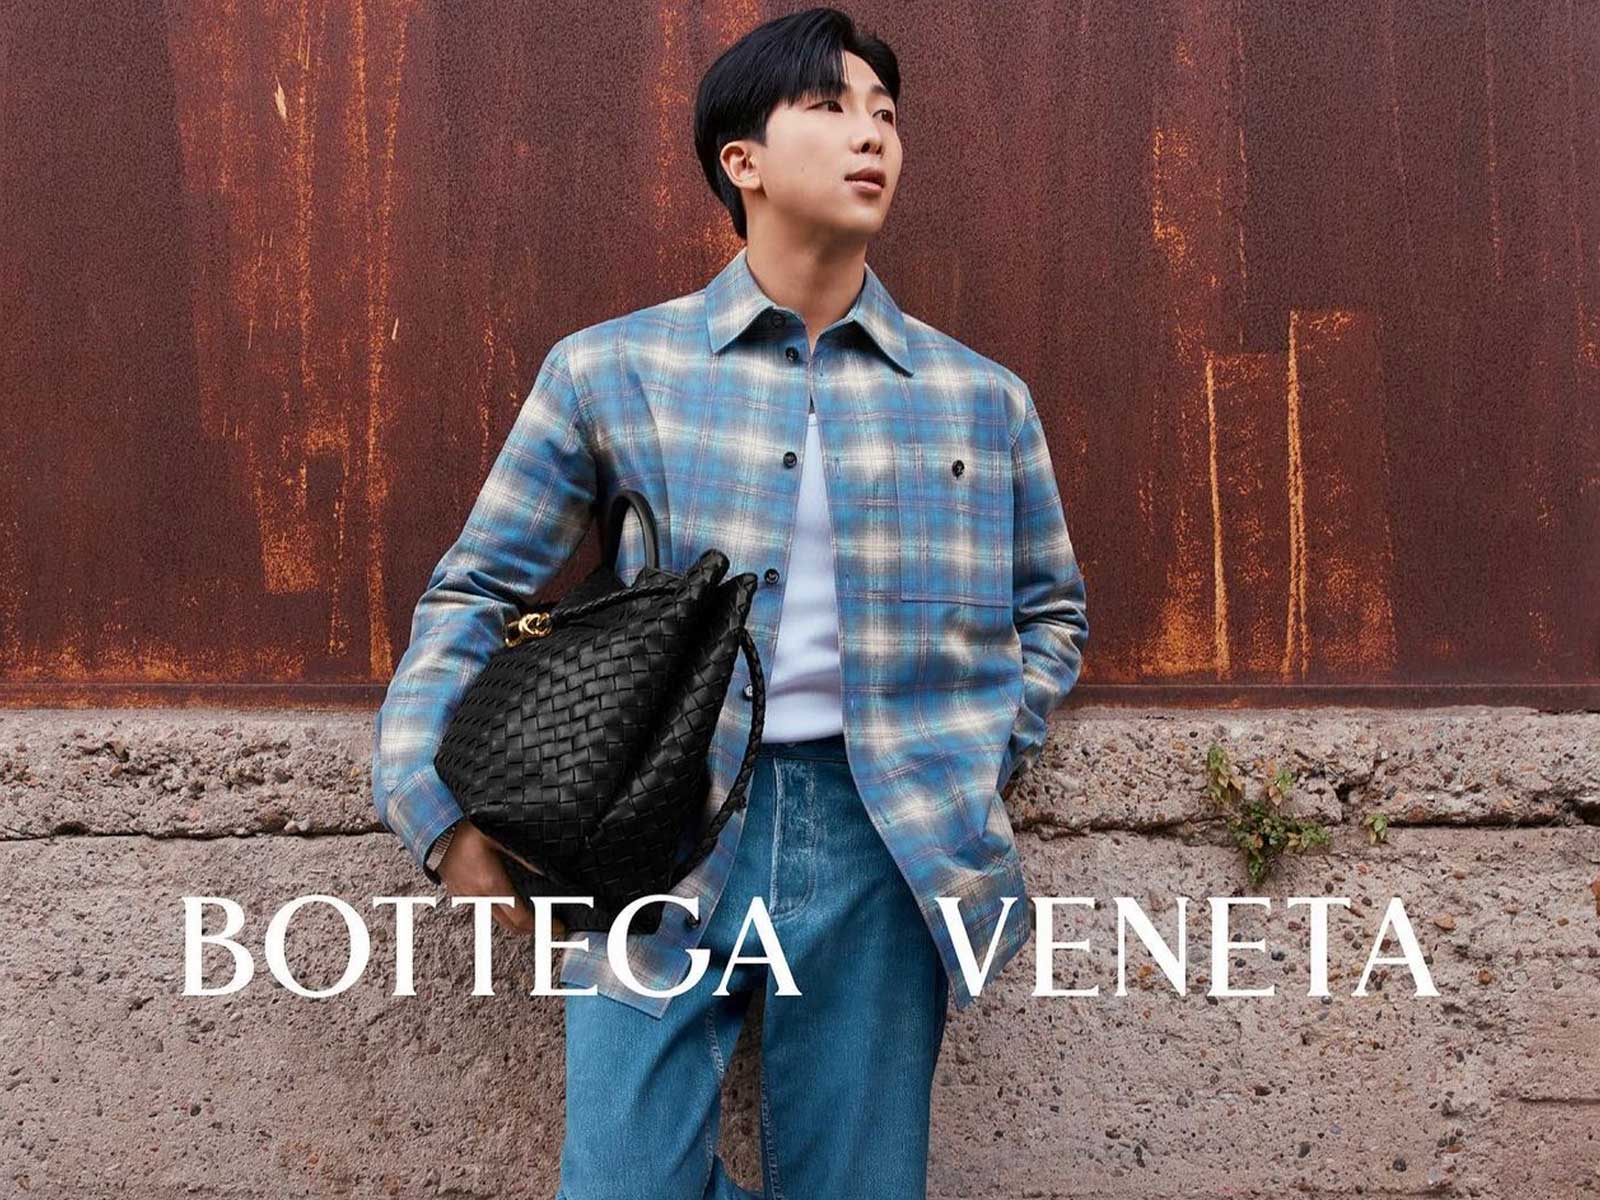 RM of BTS group becomes Bottega Veneta ambassador